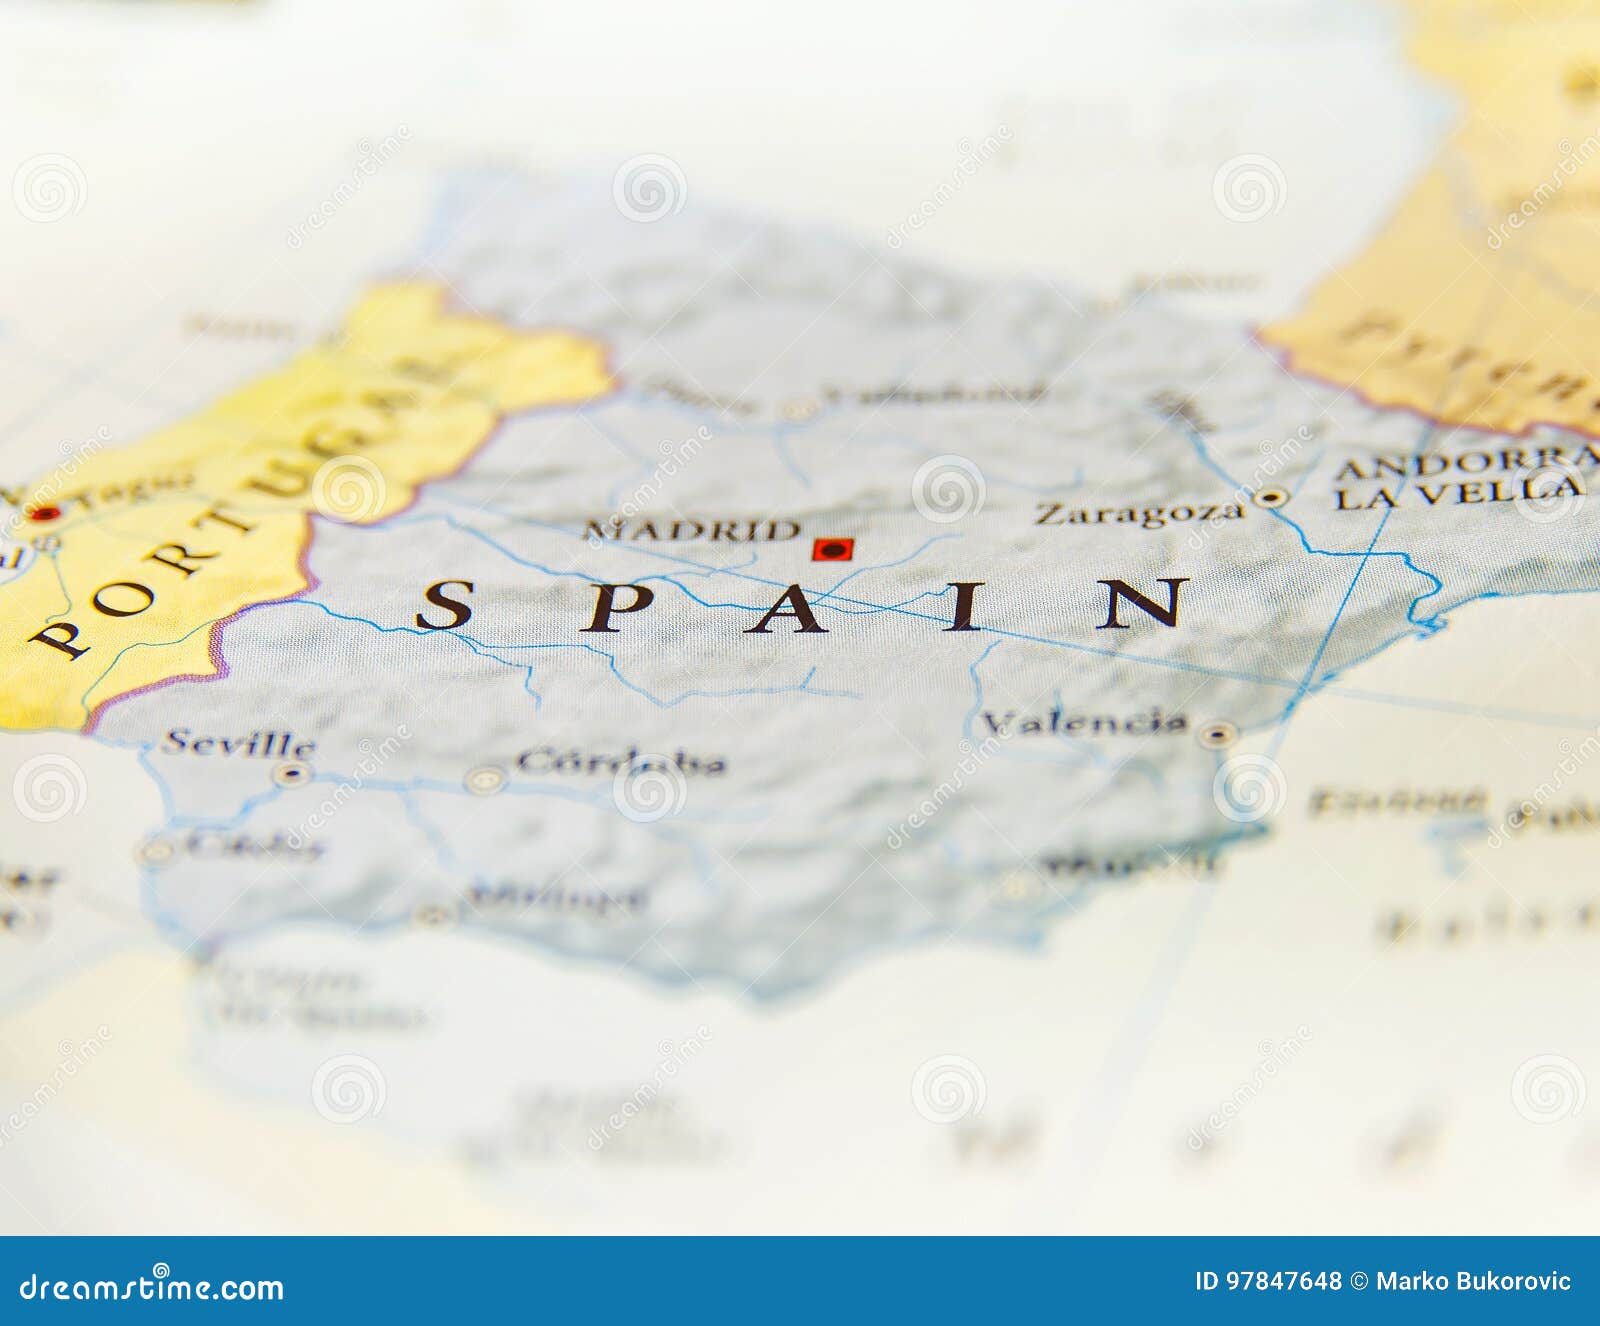 821 fotos de stock e banco de imagens de Mapa España Portugal